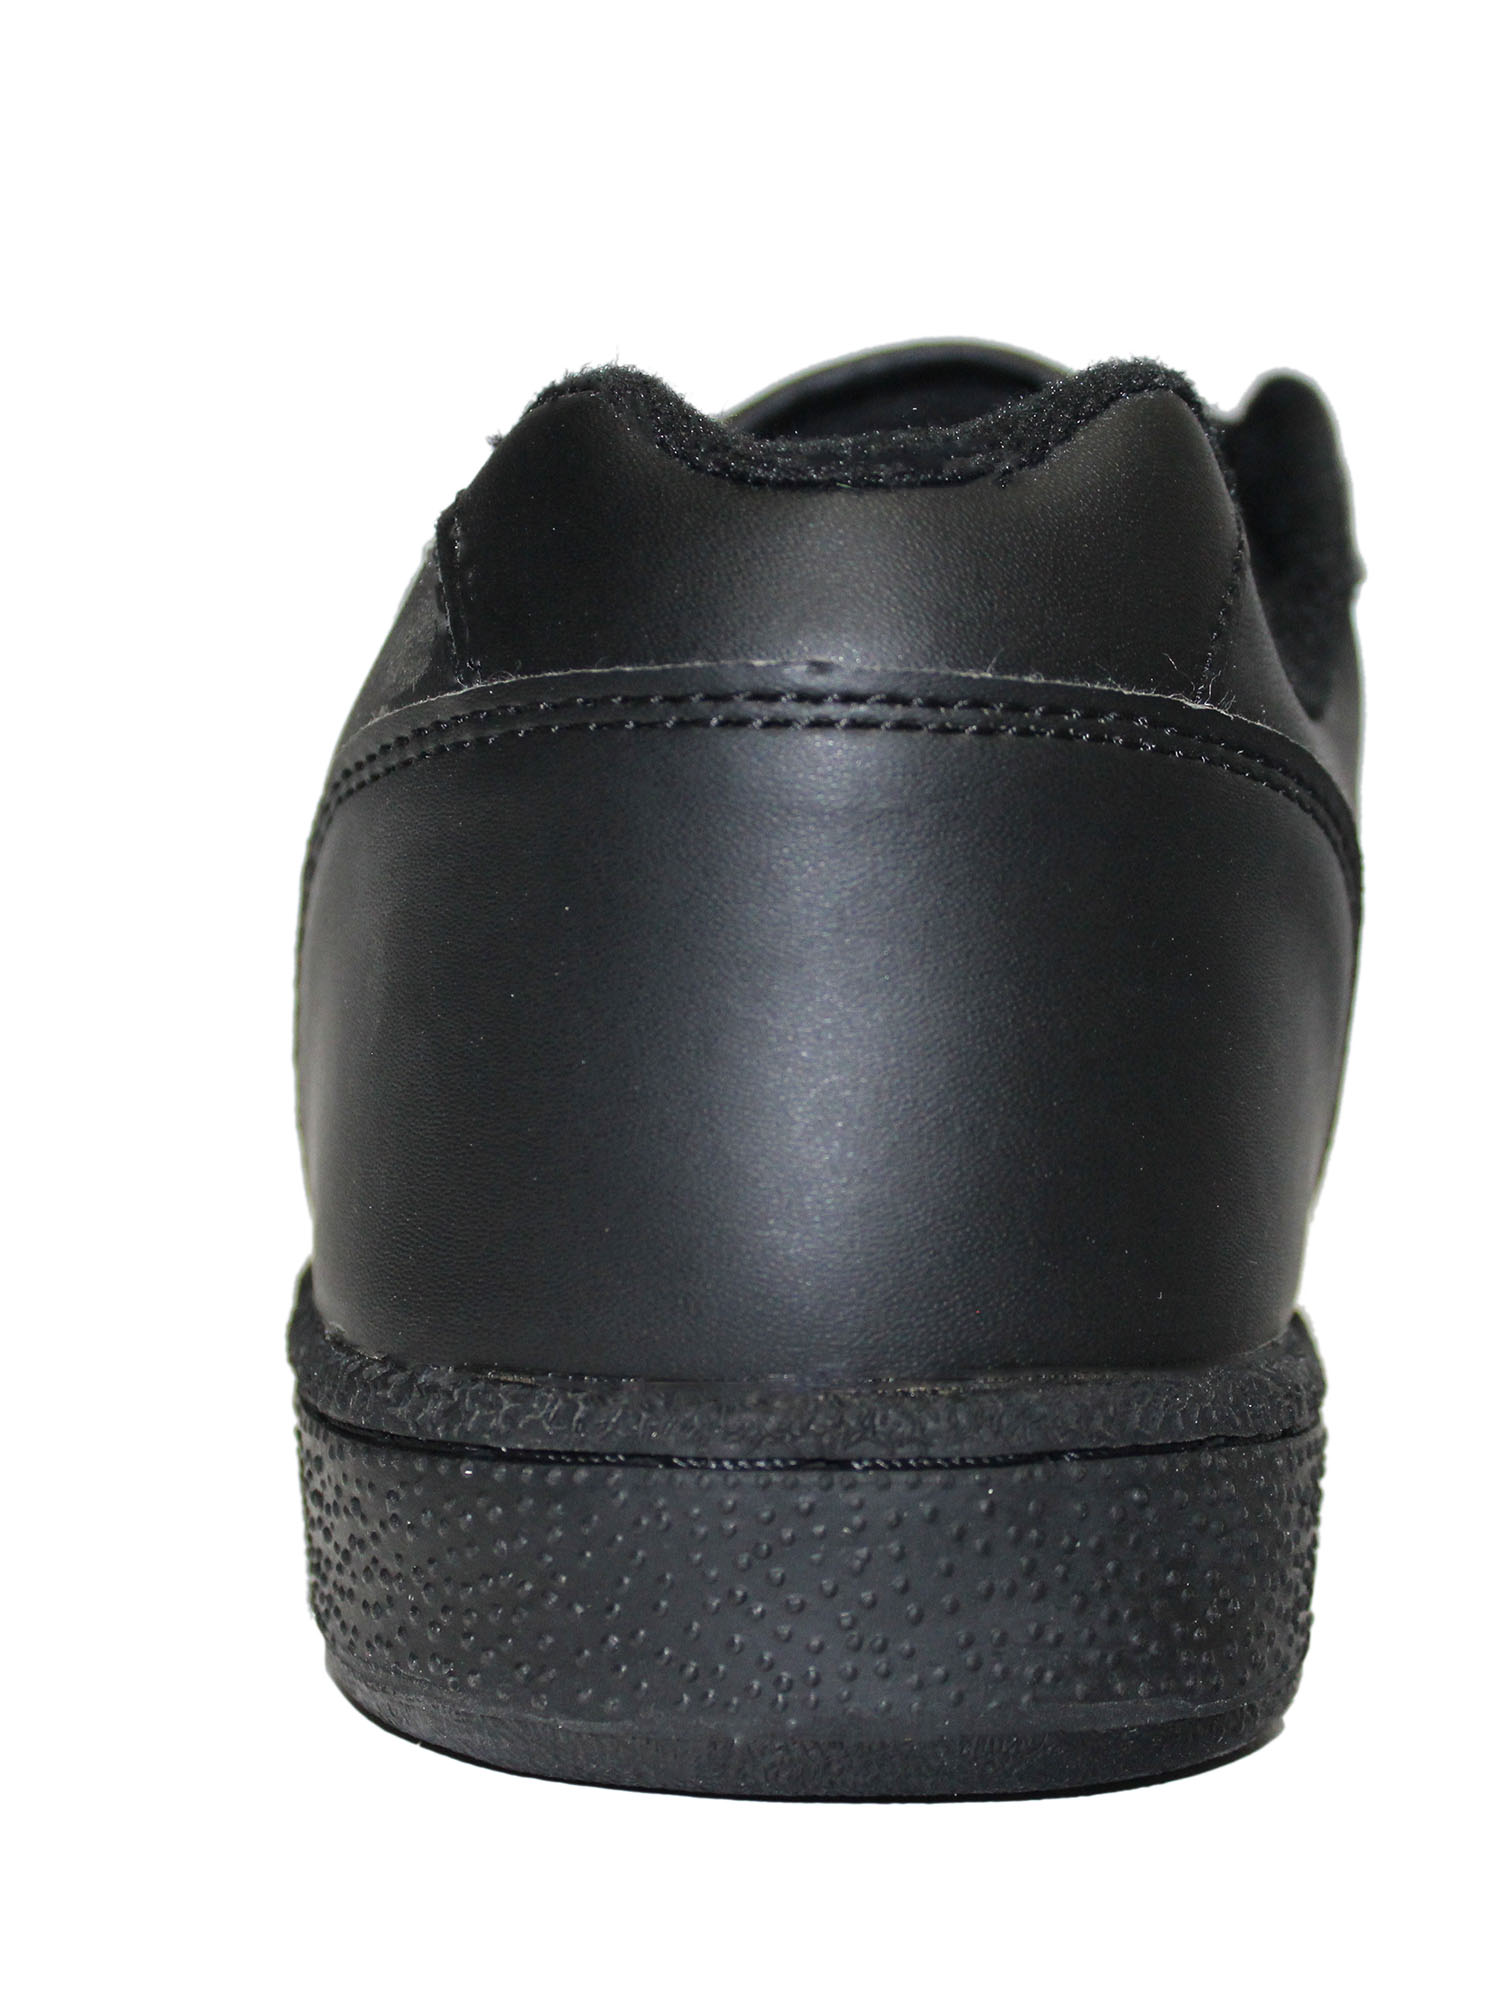 Tanleewa Men's Leather Strap Sneakers Lightweight Hook and Loop Walking Shoe Size 5.5 Adult Male - image 4 of 4